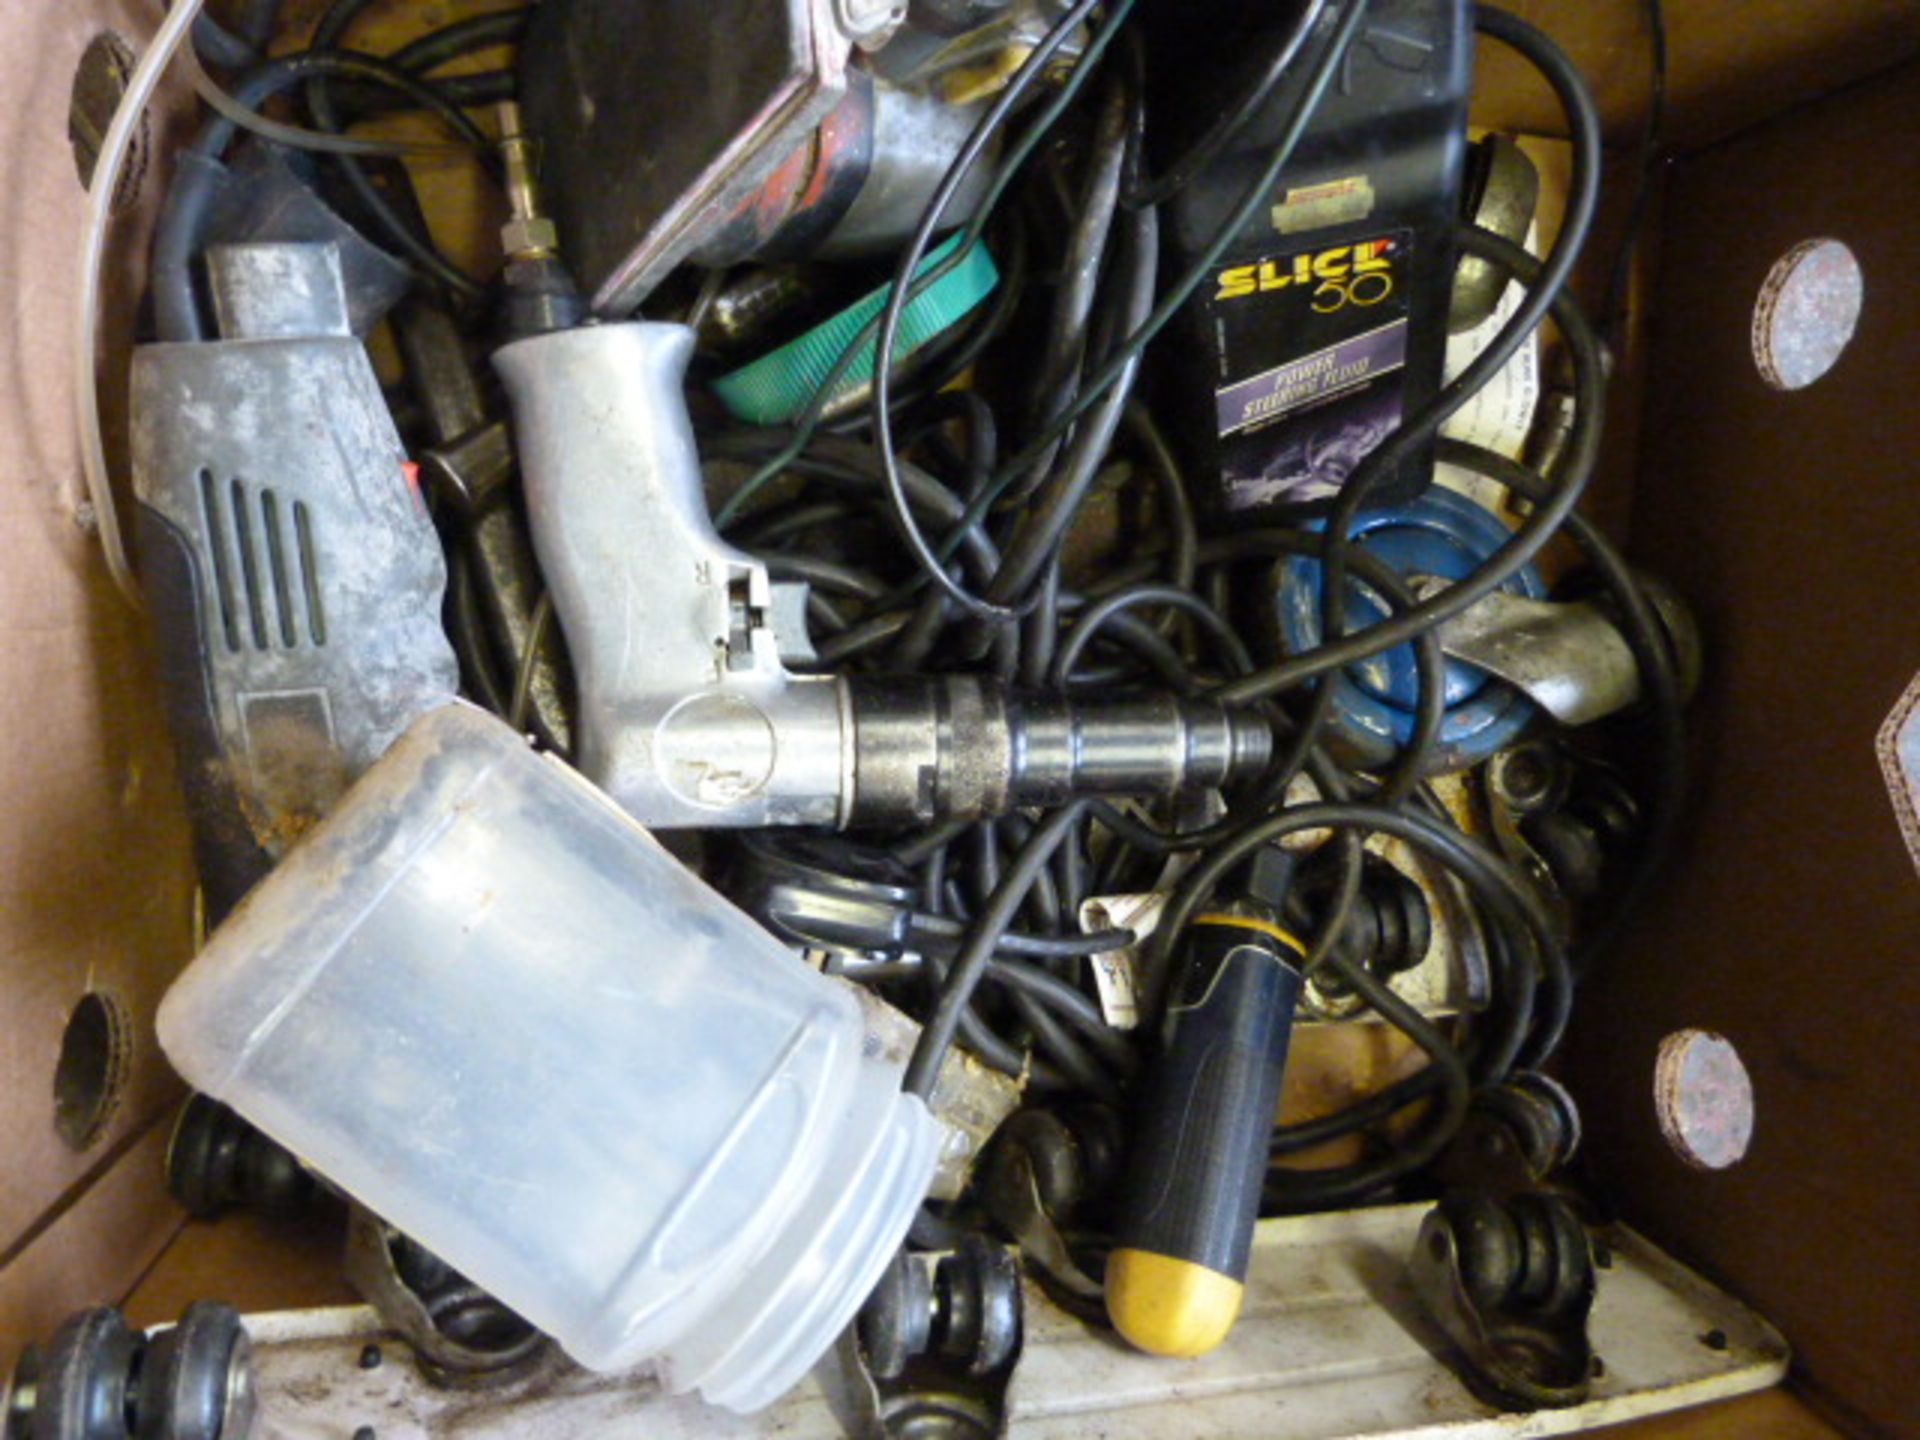 Box of Pneumatic Tools, Electric Sander, etc.